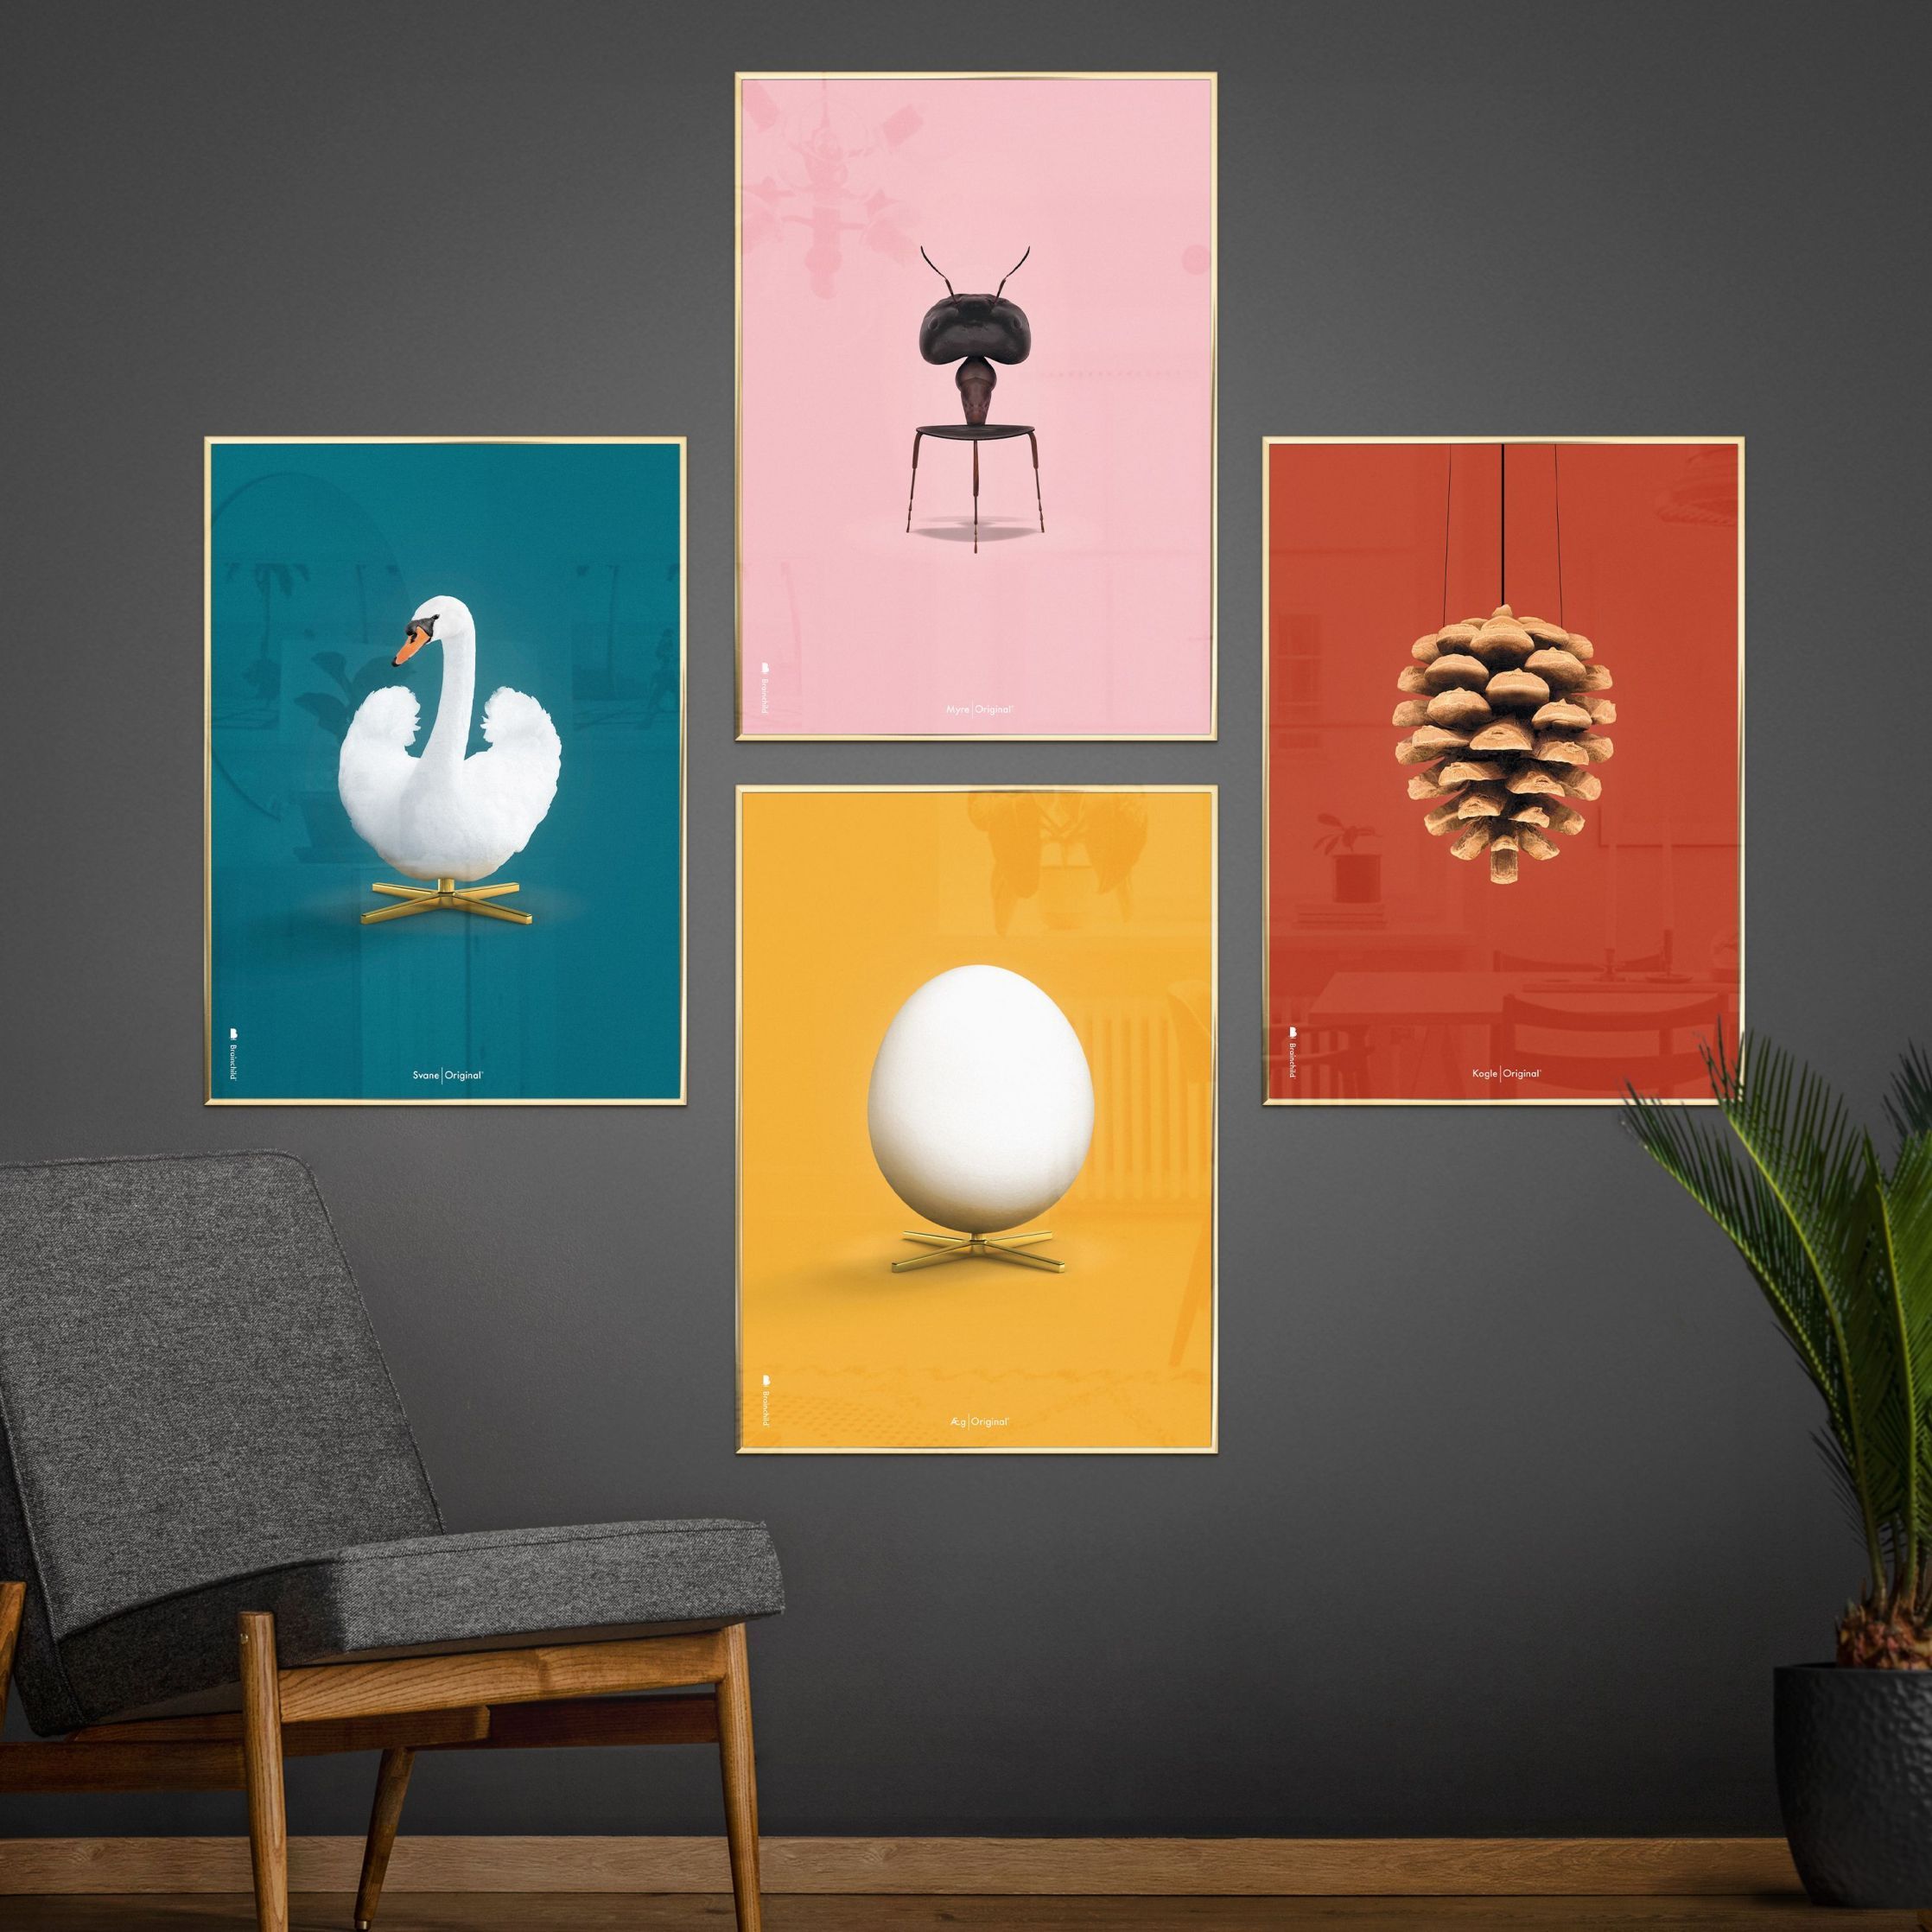 Brainchild Egg Classic Poster, Frame Made Of Light Wood 30x40 Cm, Yellow Background